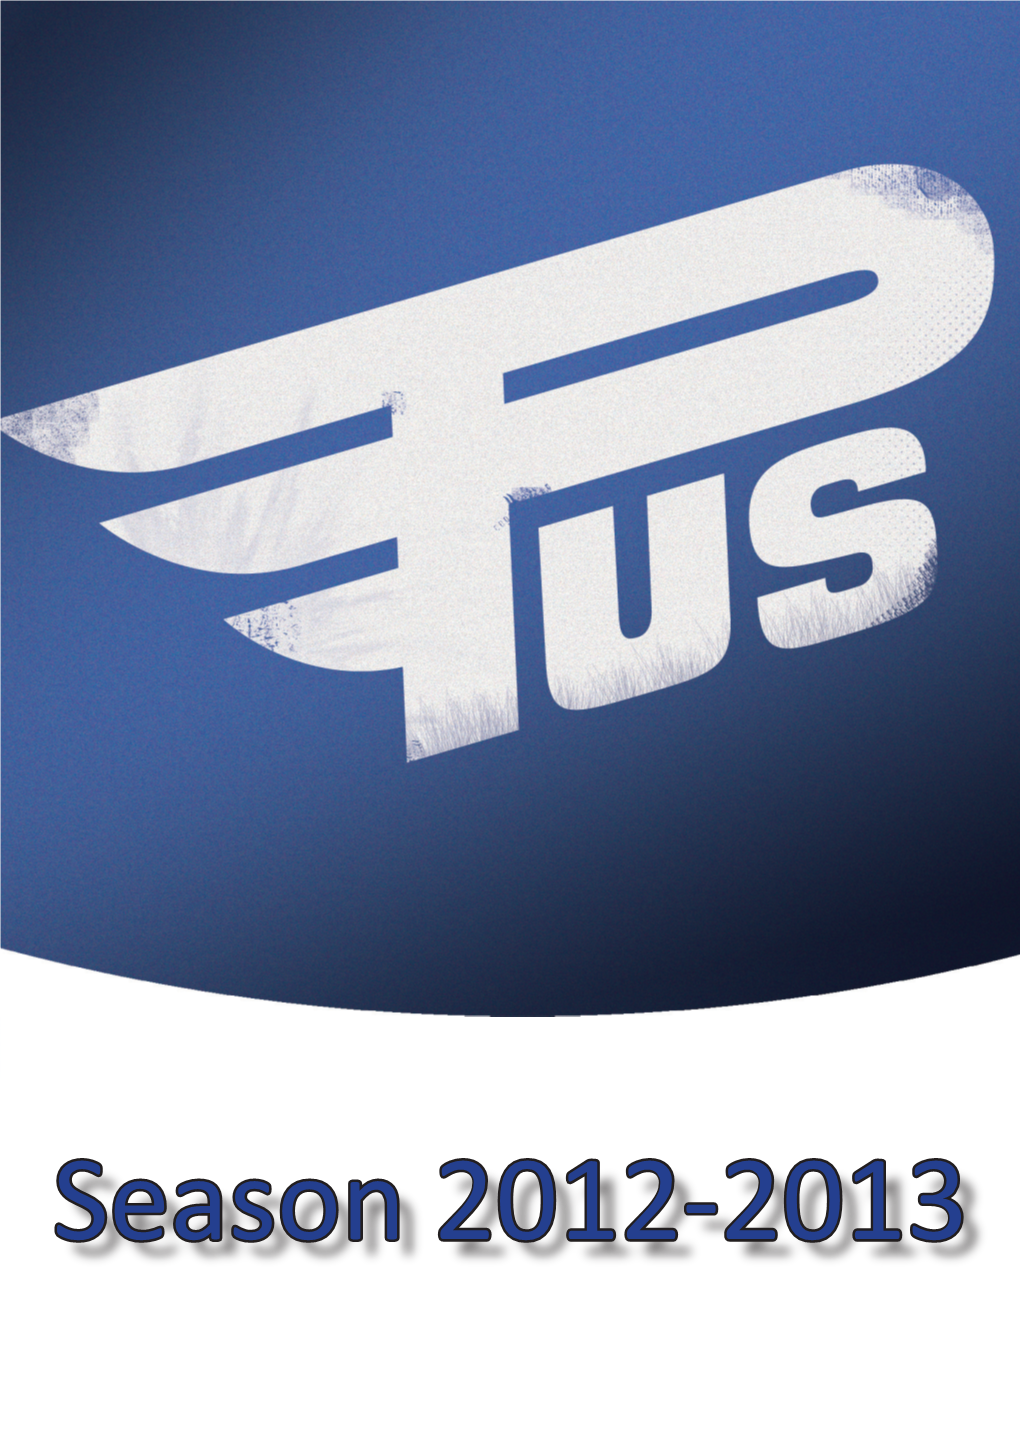 Season 2012-2013